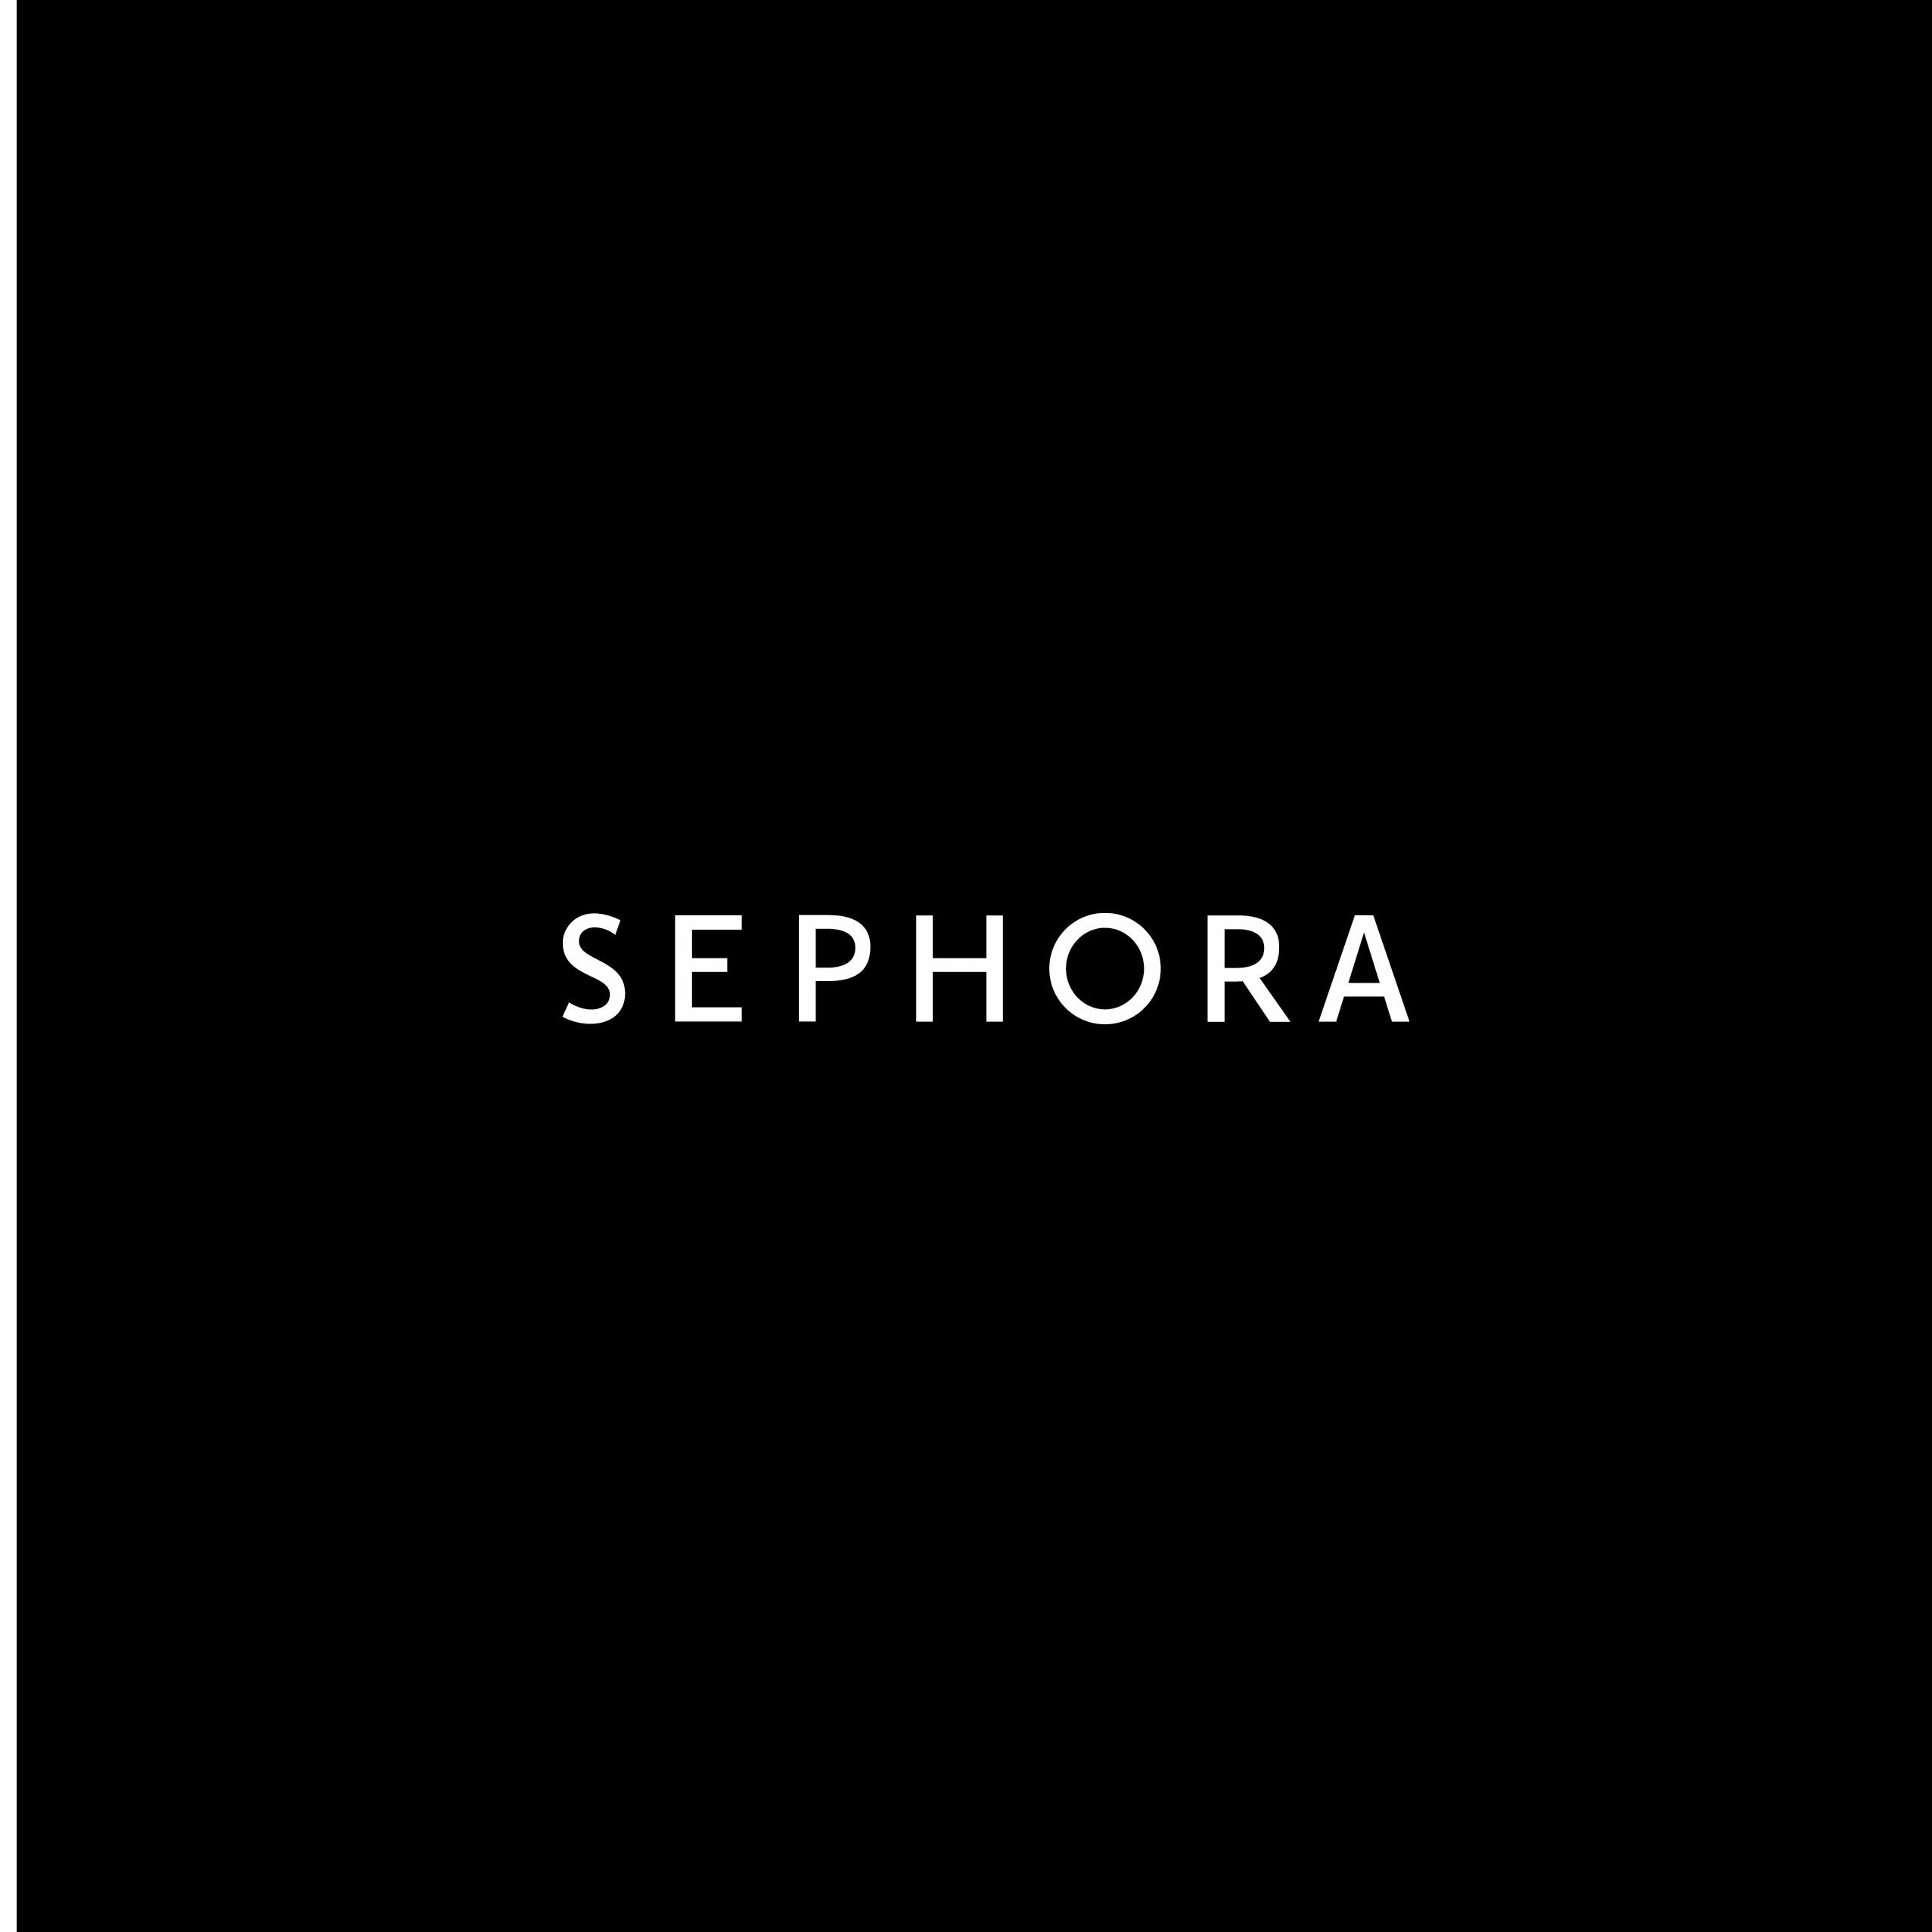 SEPHORA Logo